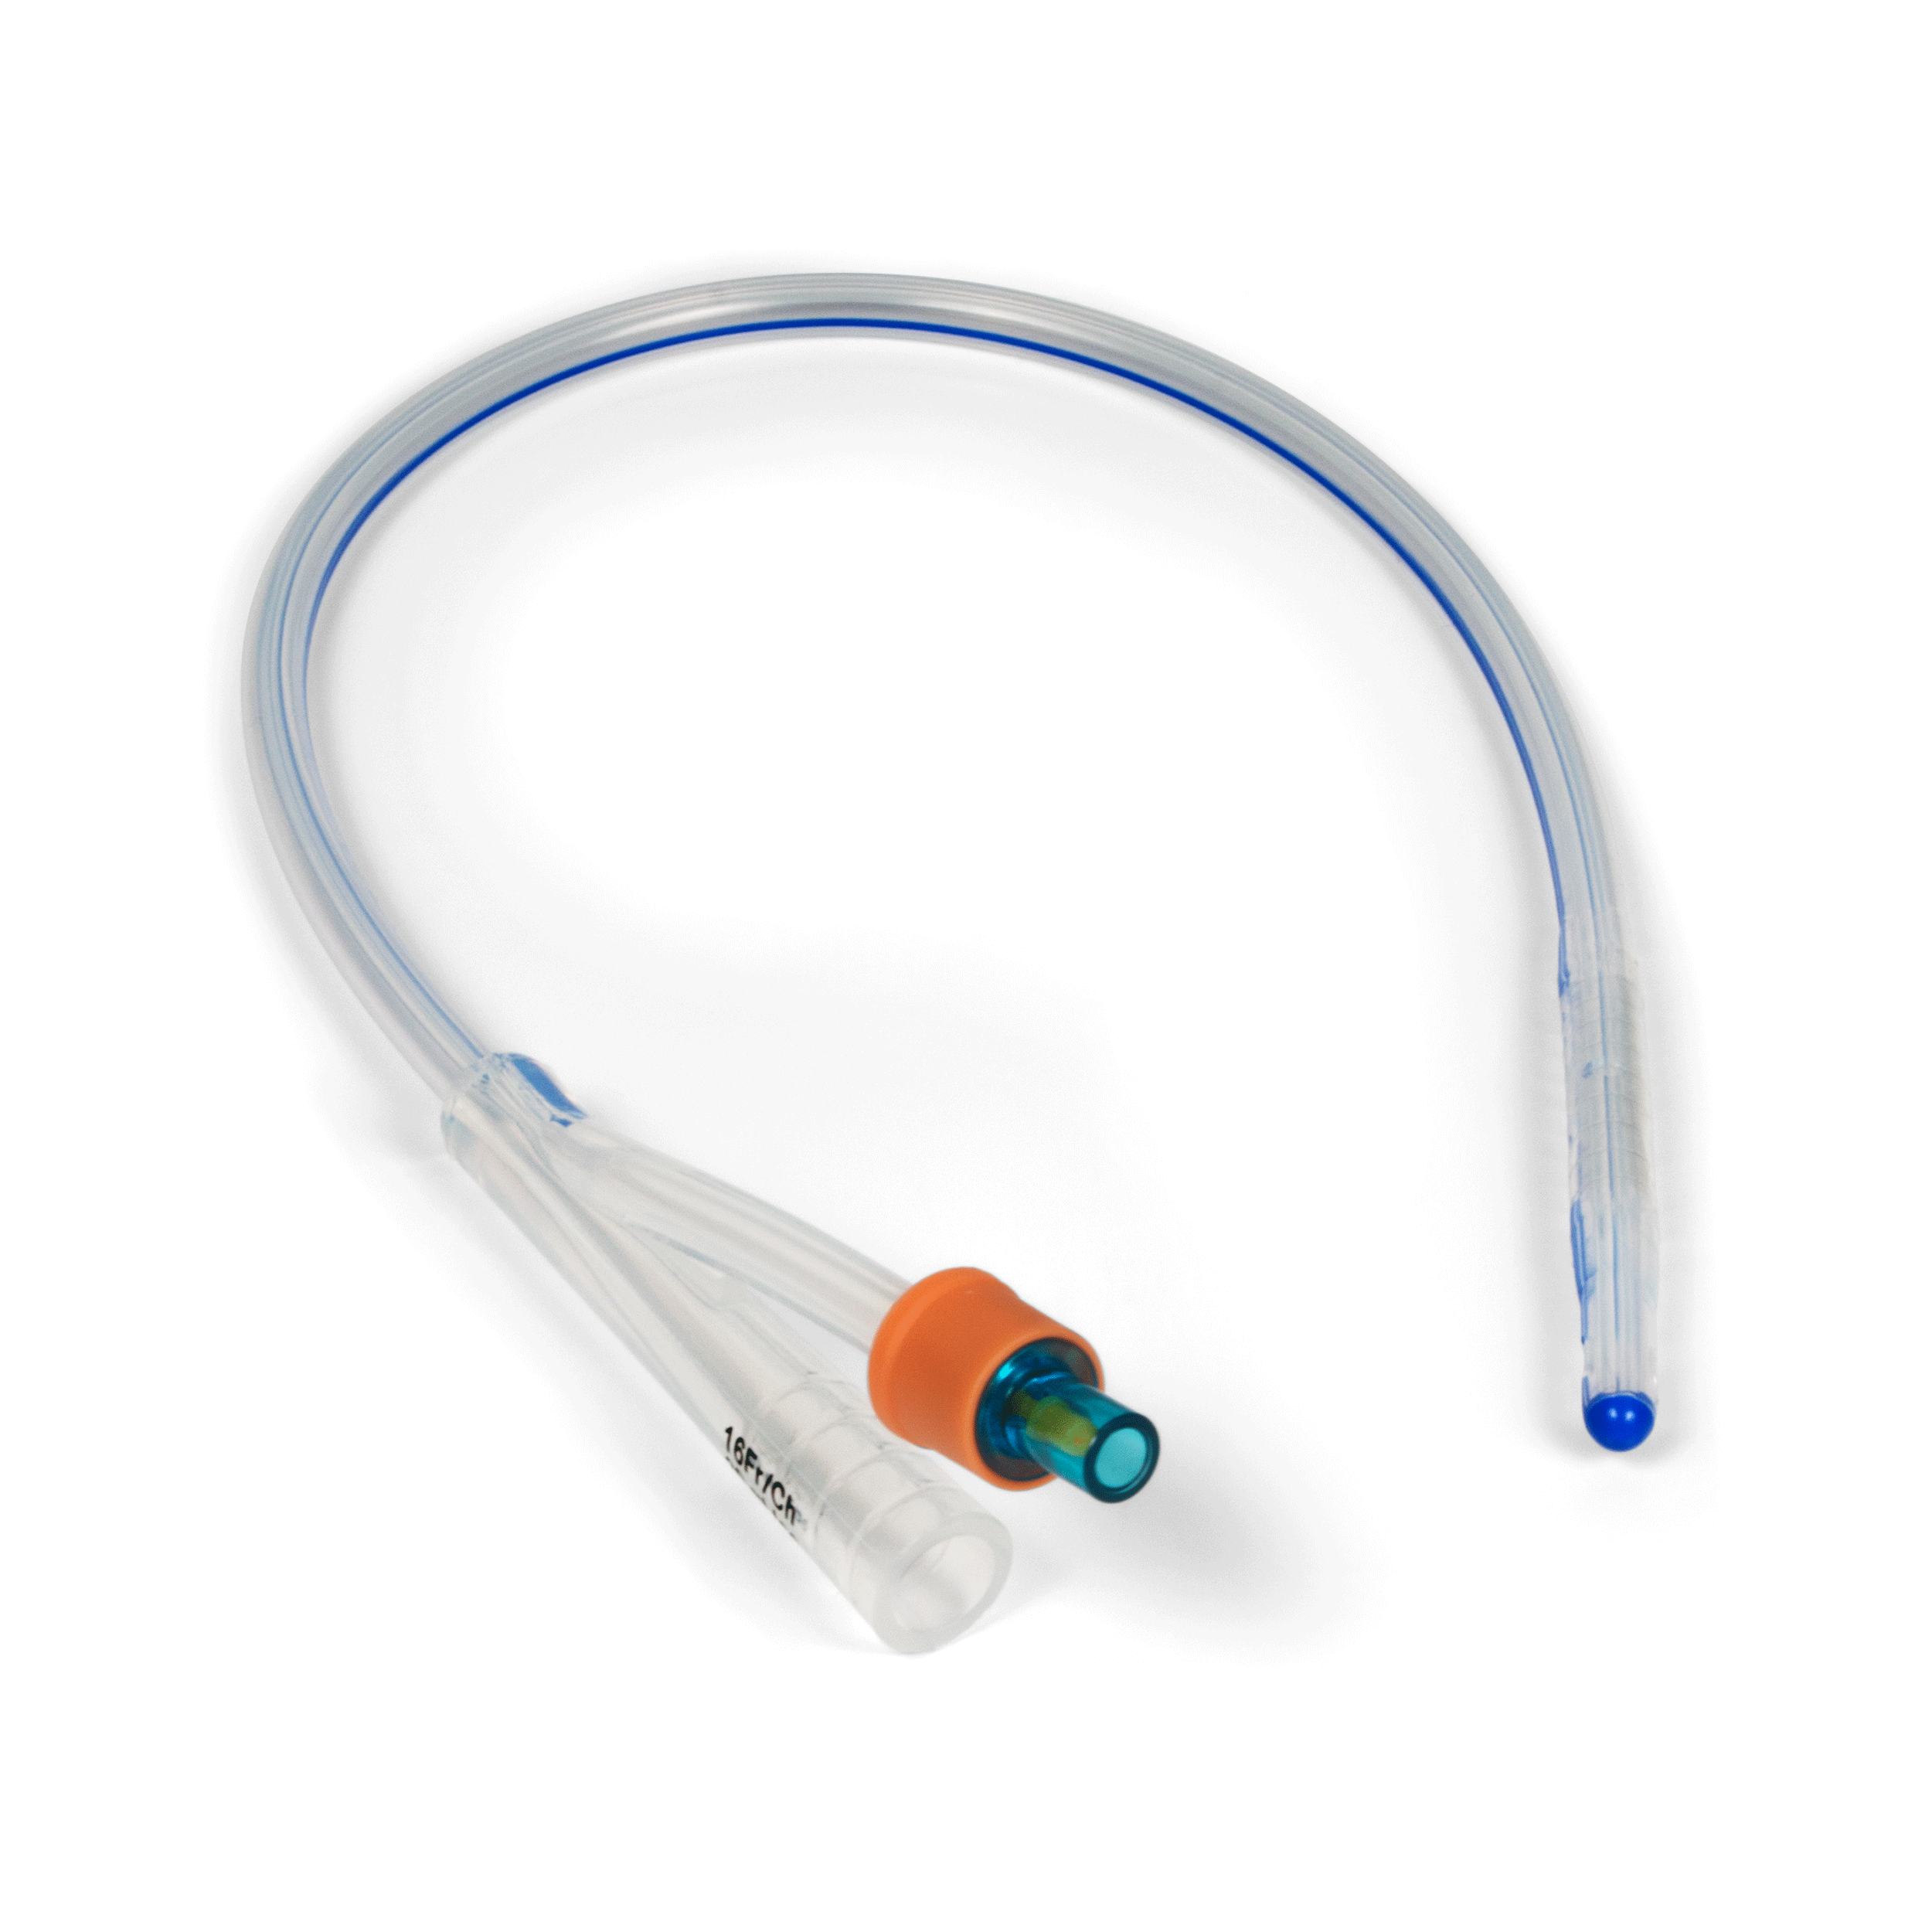 Silicone Foley Catheters 2-way Standard - 16FR / 30cc